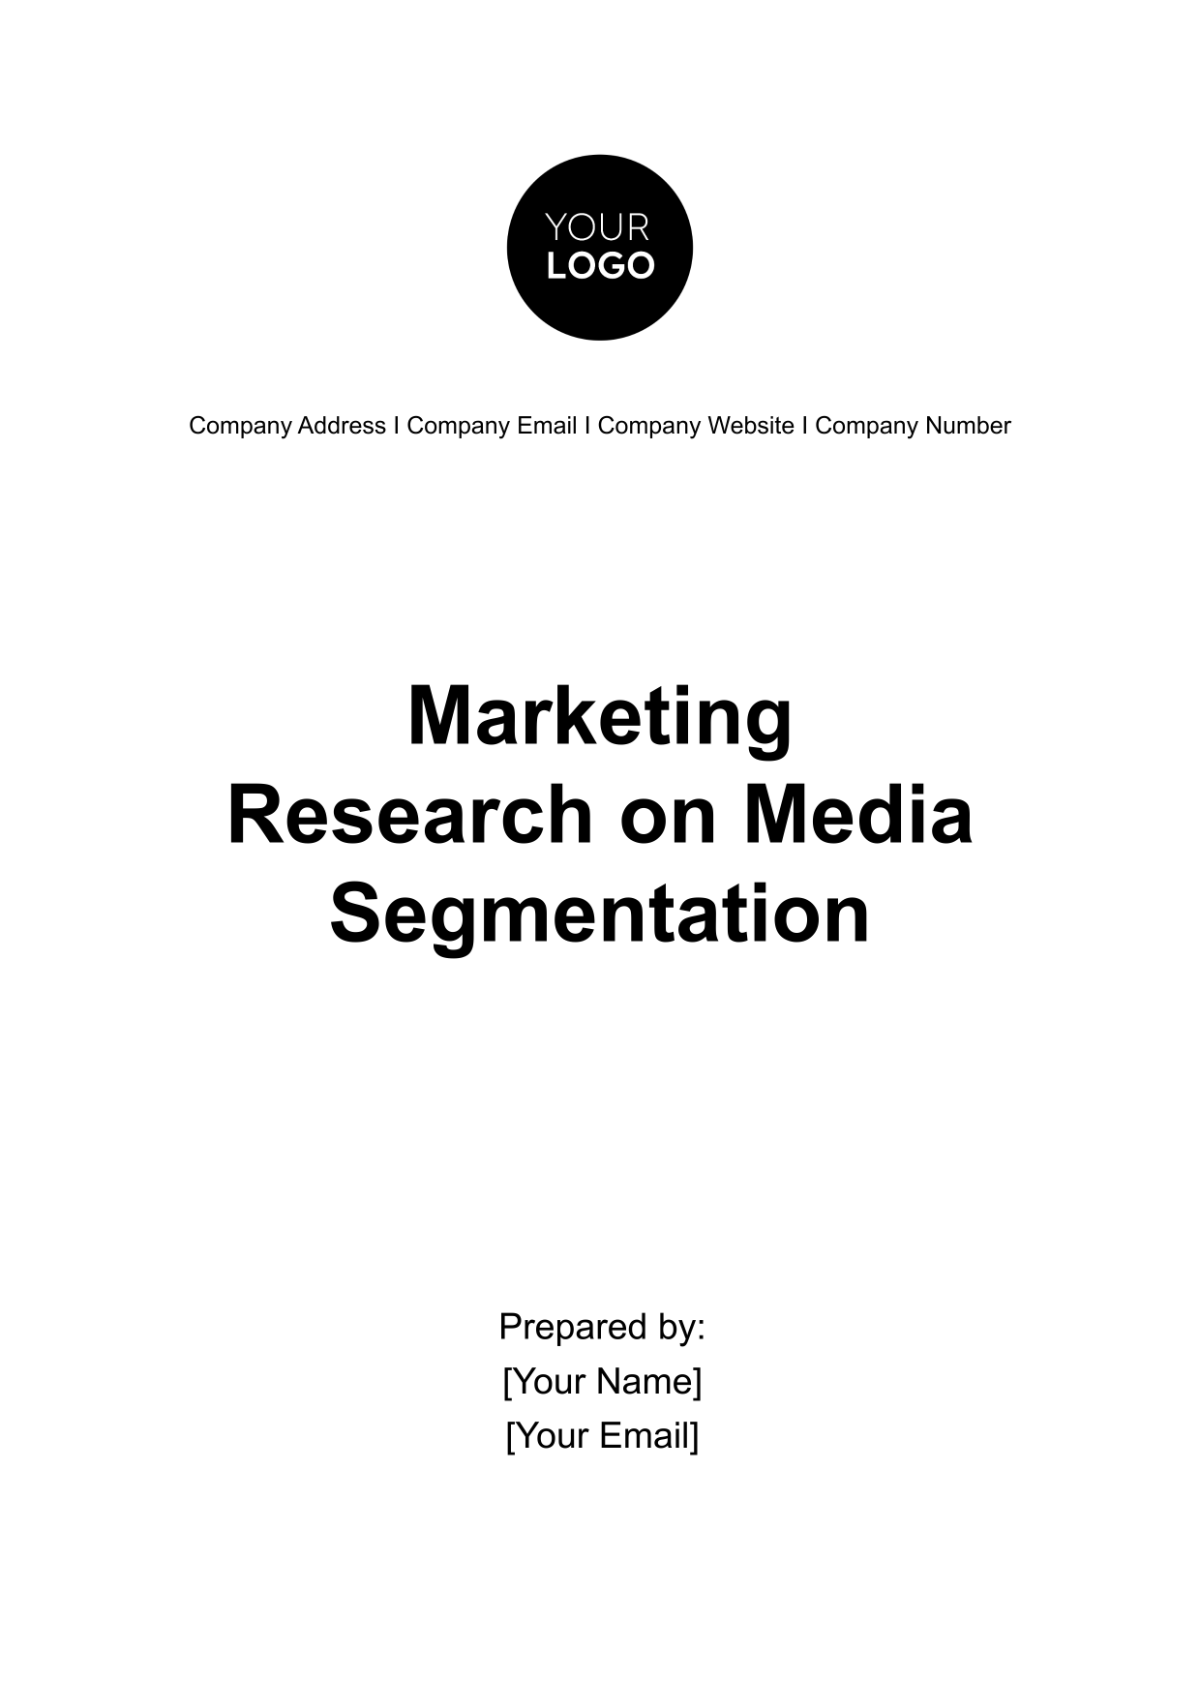 Marketing Research on Media Segmentation Template